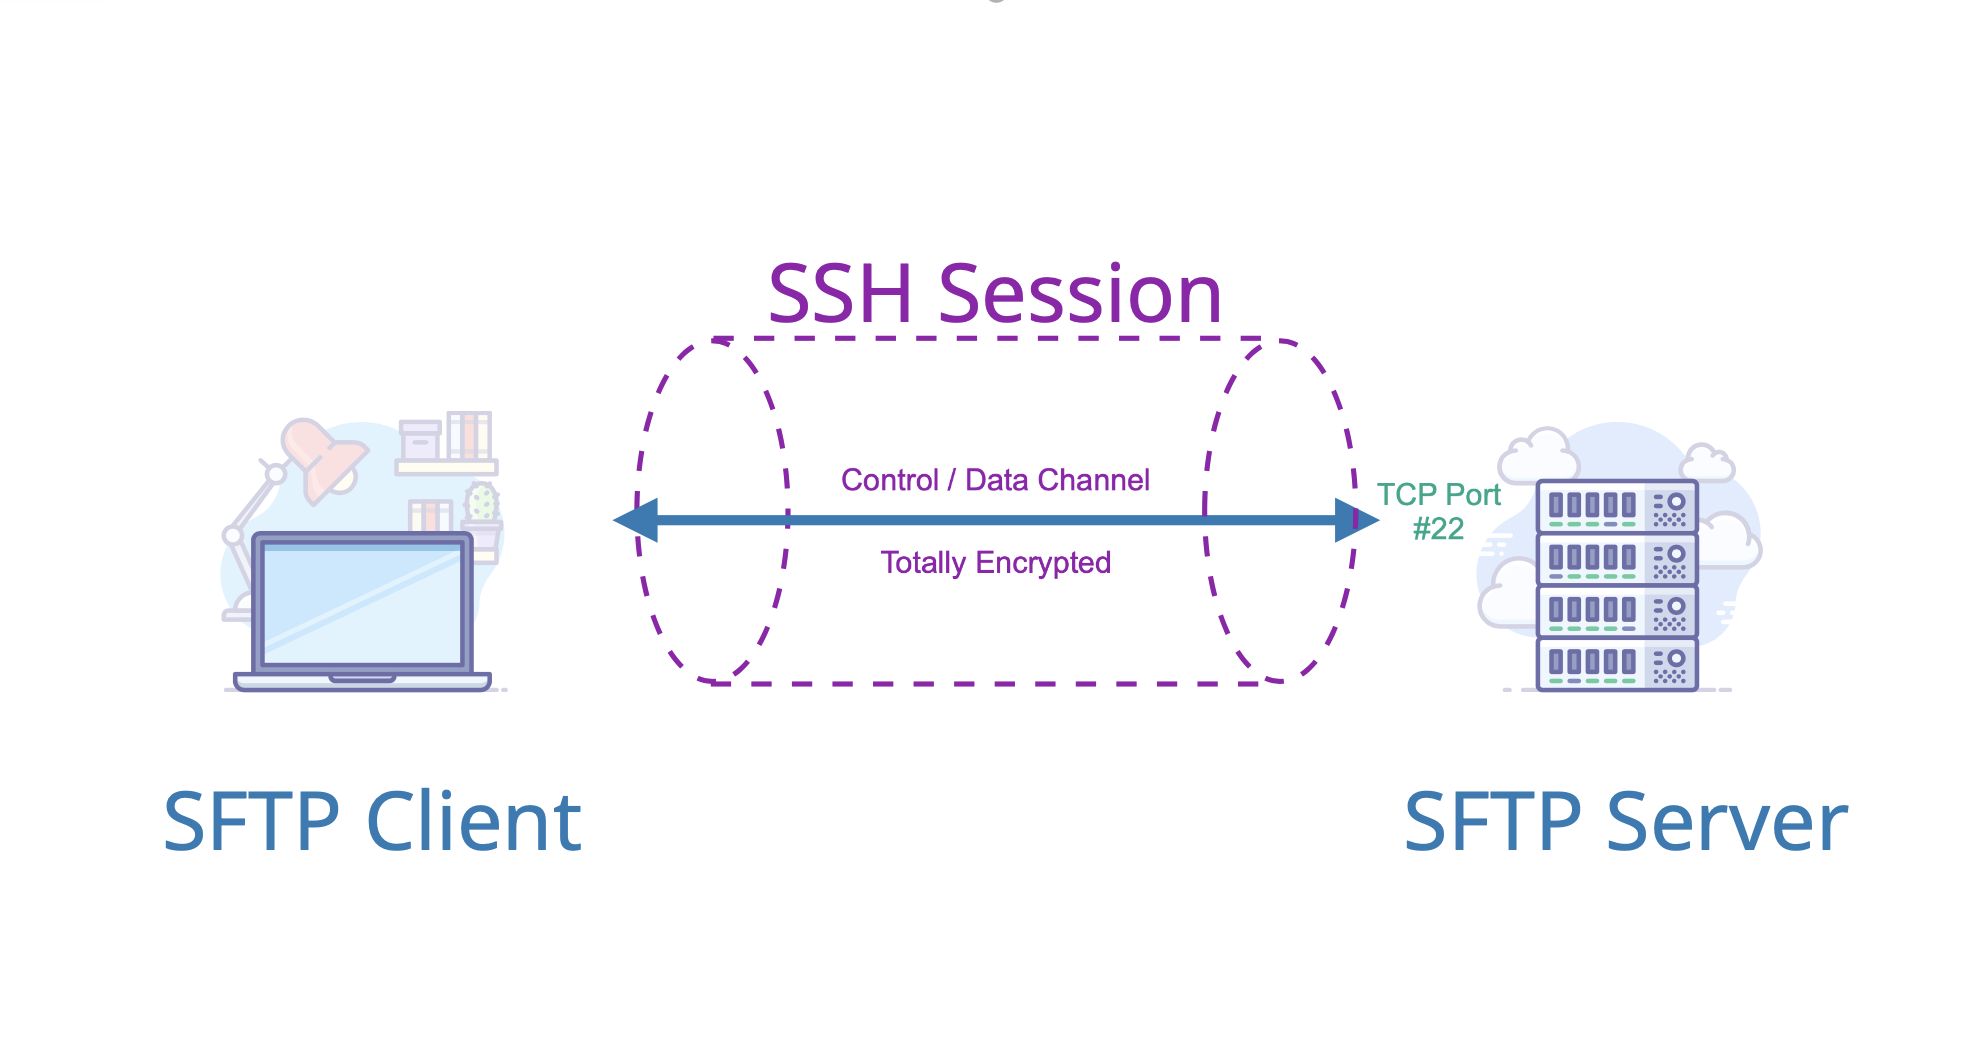 SSH Session Illustration